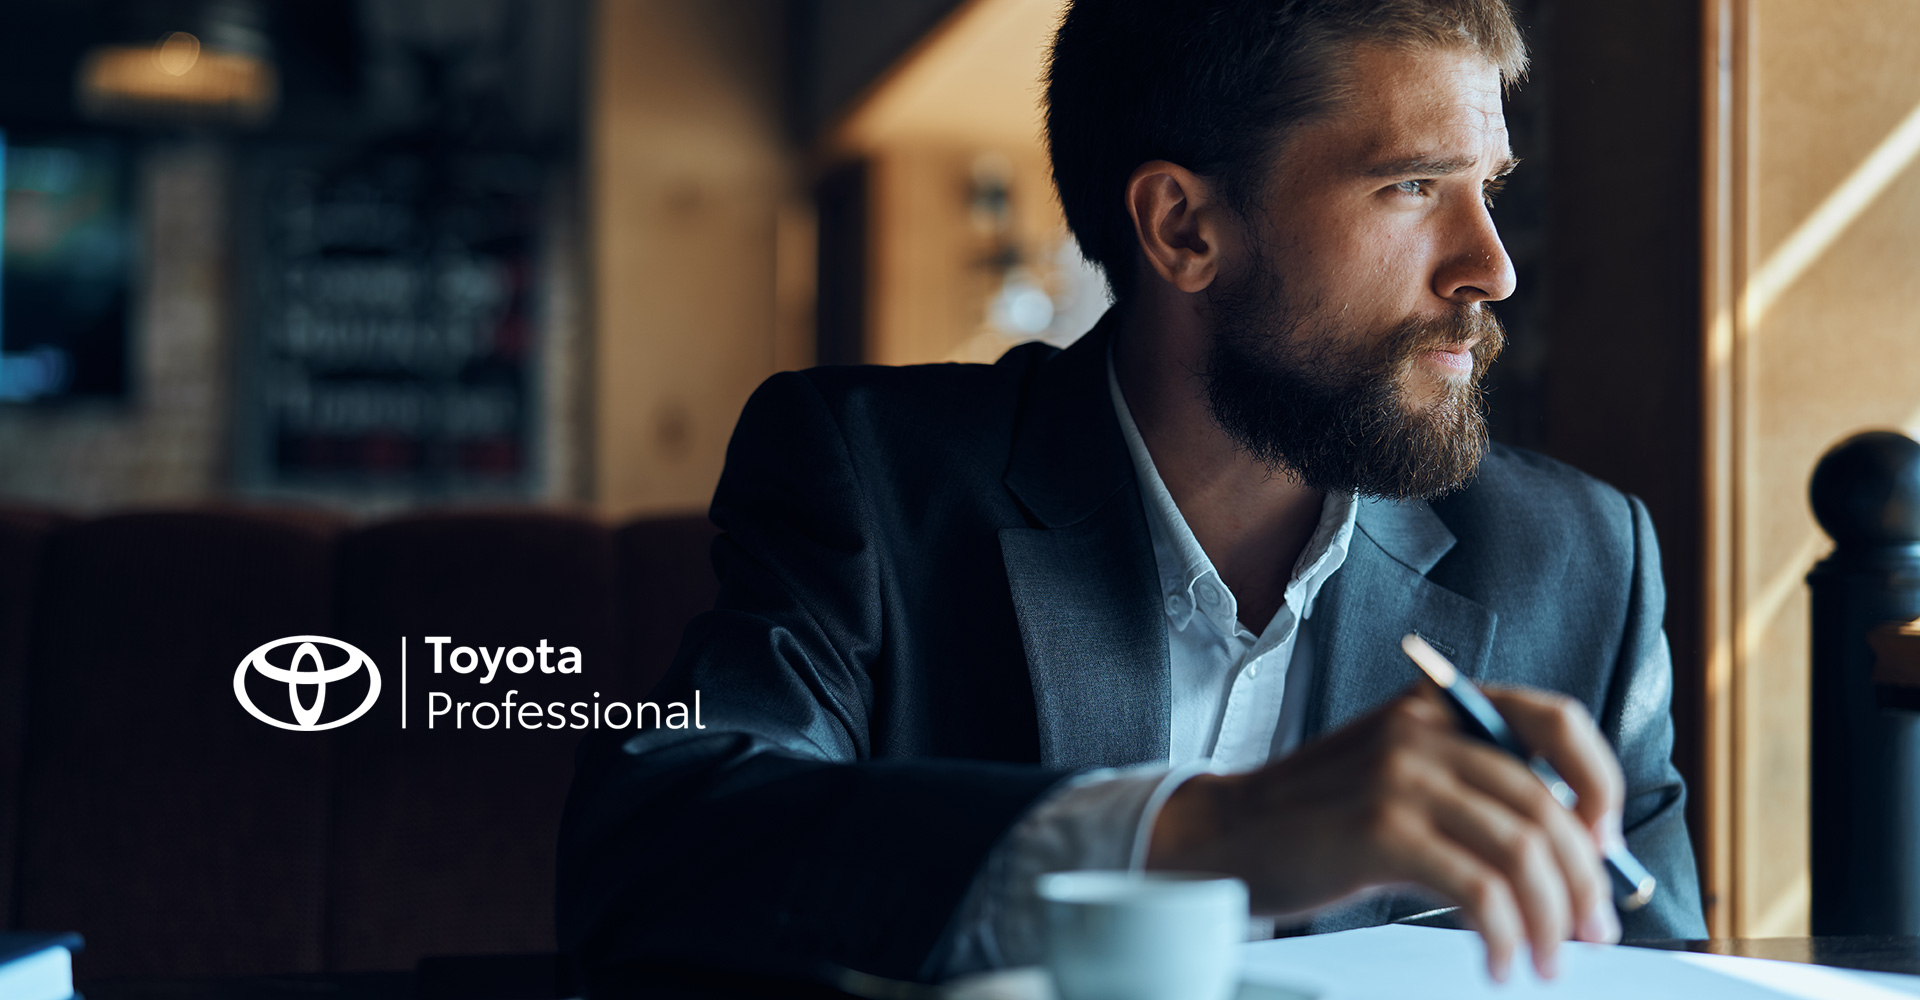 Mann mit Anzug & Toyota Professional Logo